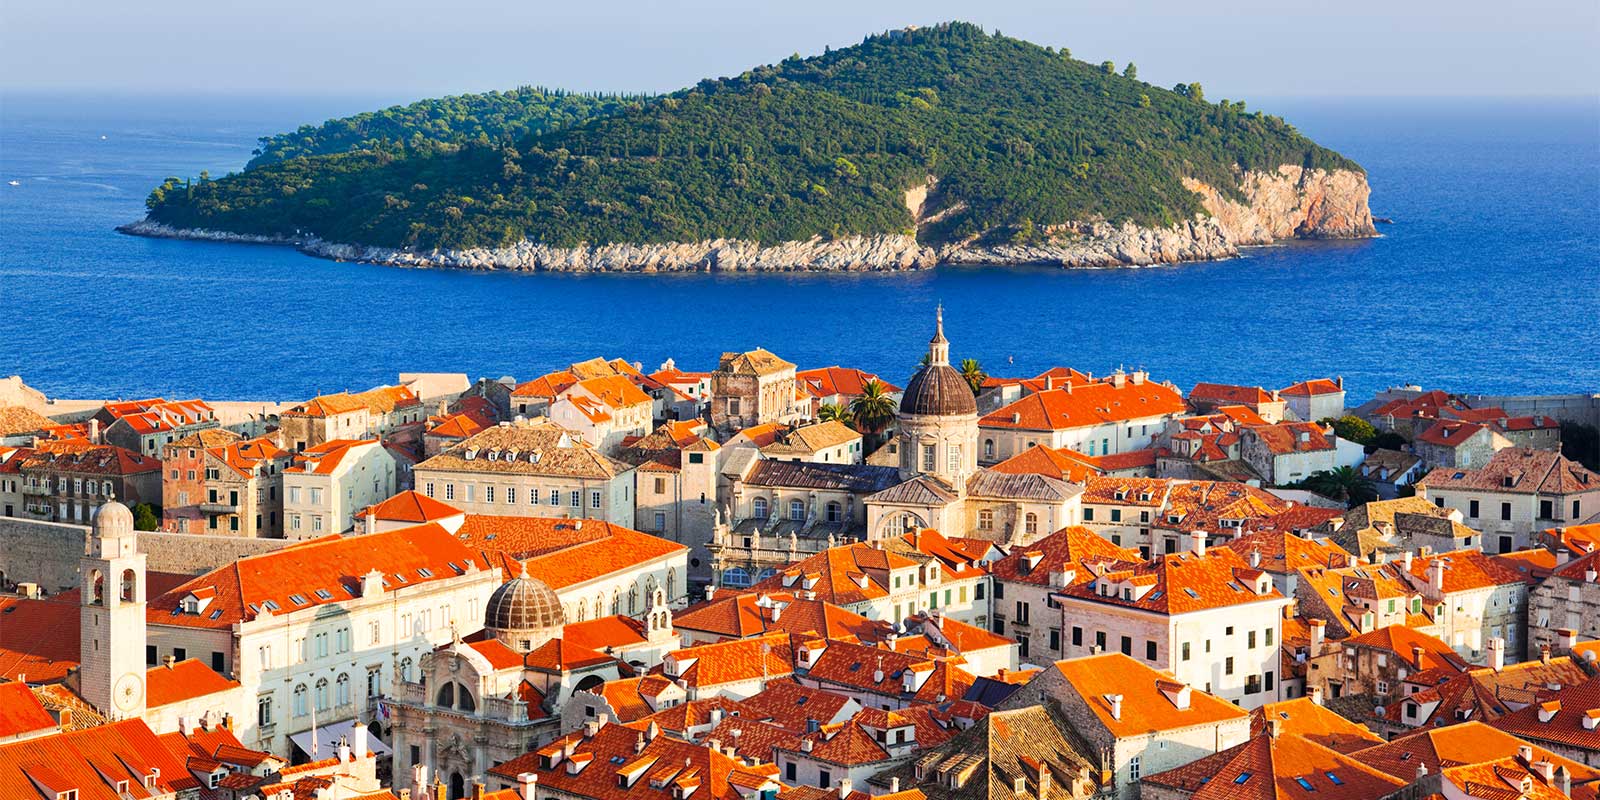 Rooftops of the city of Dubrovnik in Croatia